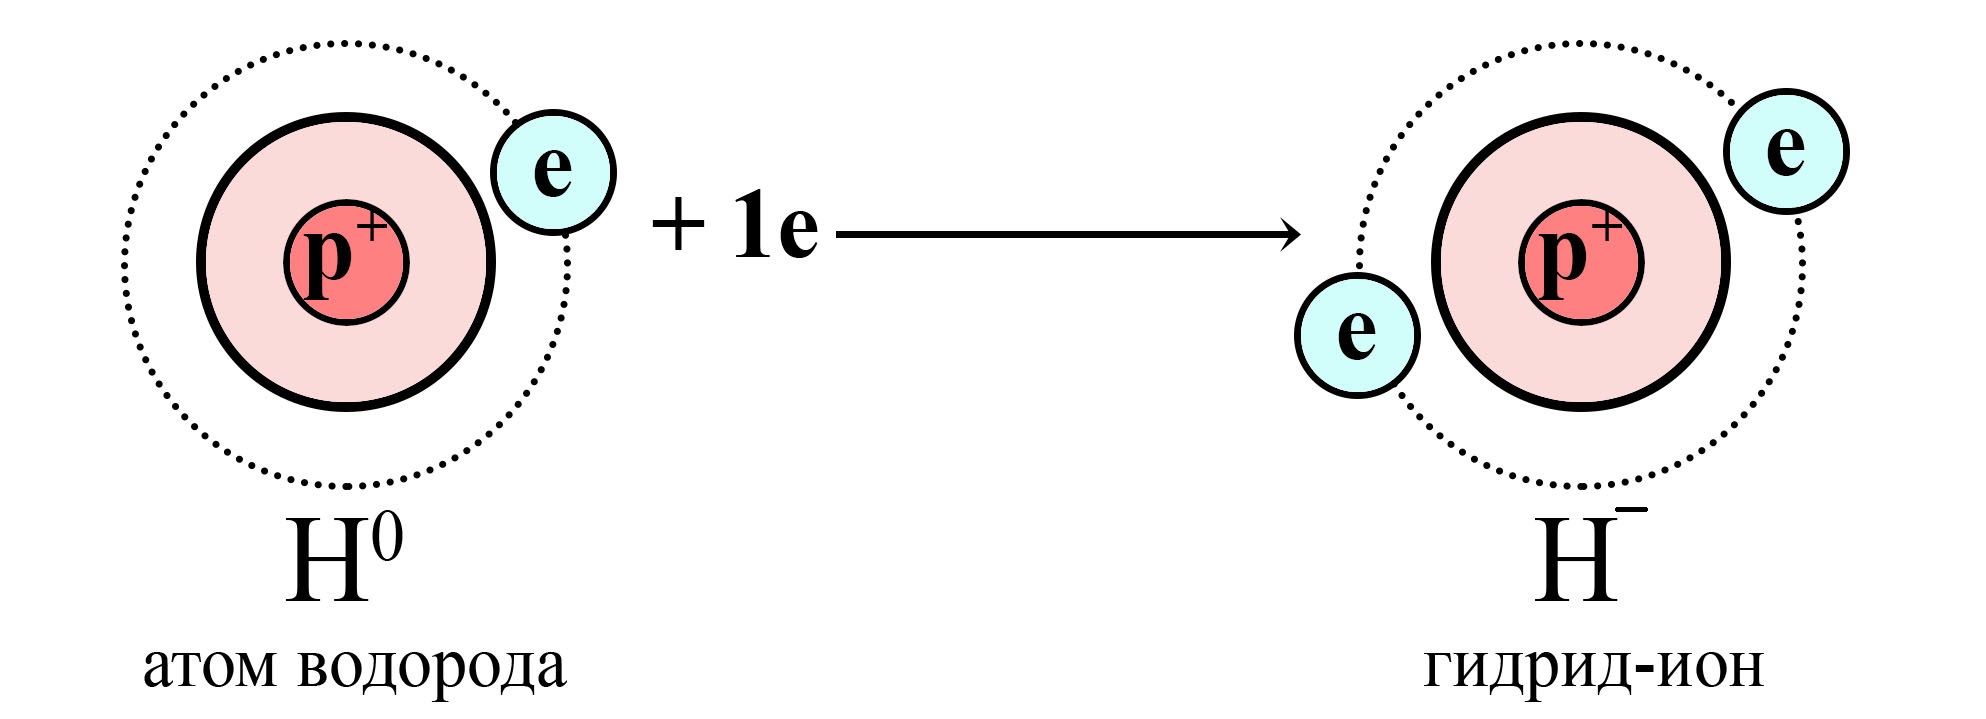 Водороду не хватает одного электрона до завершенного электронного уровня